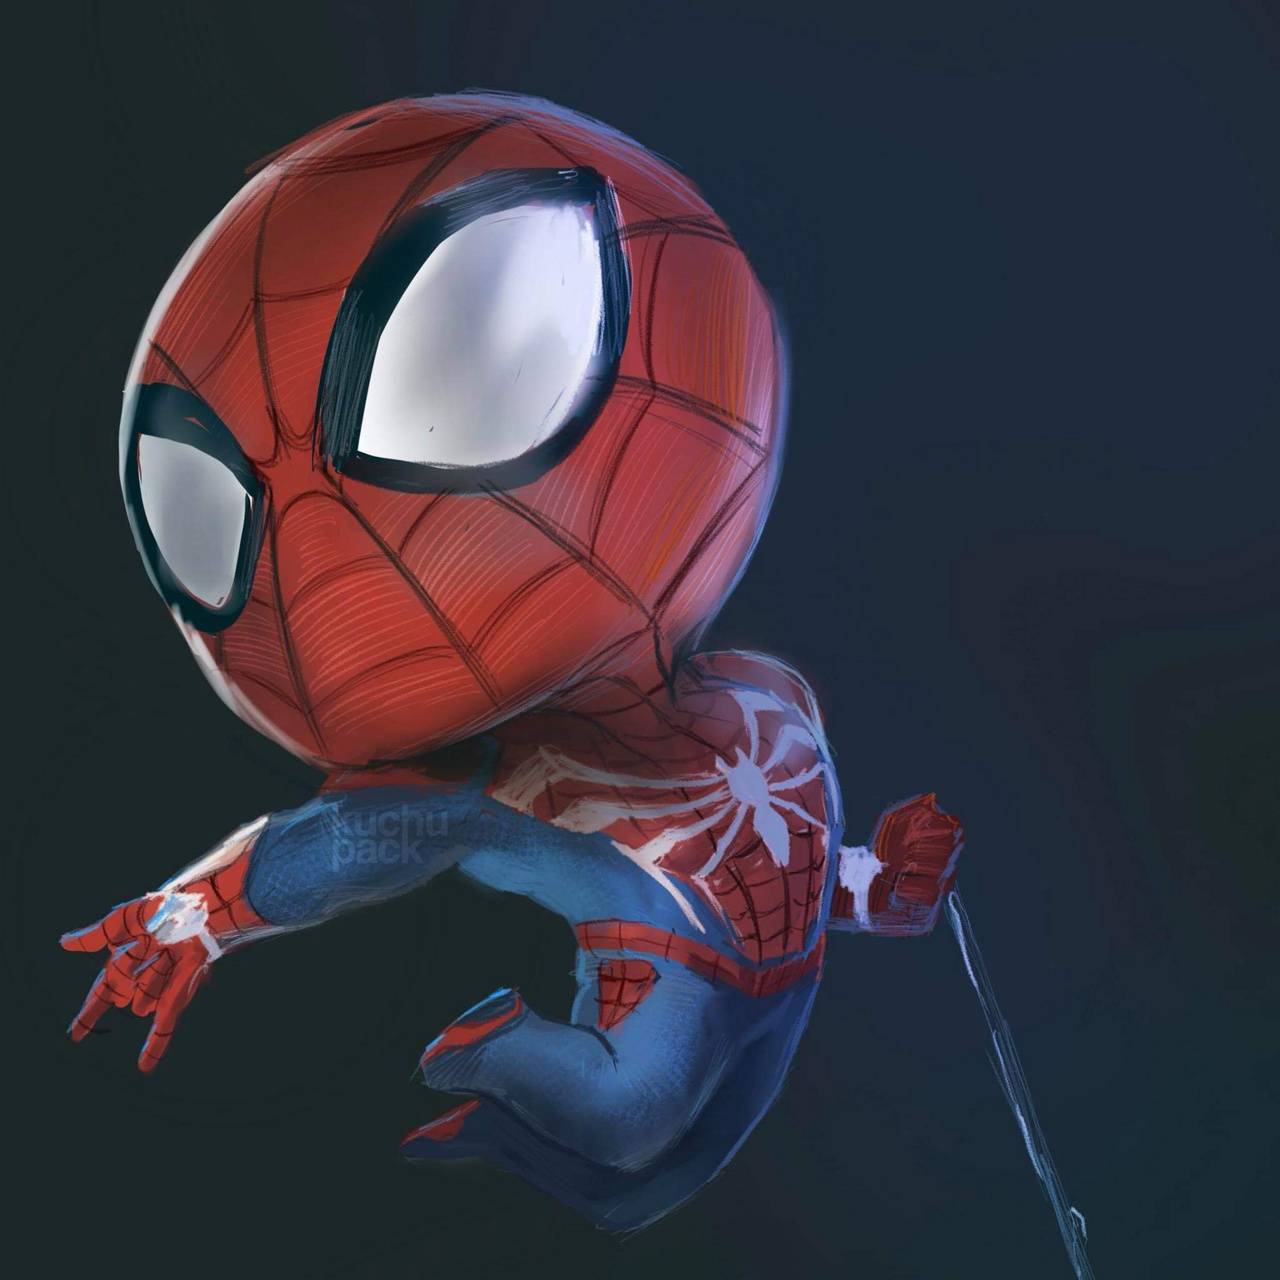 Spiderman PS4 chibi wallpaper by .zedge.net